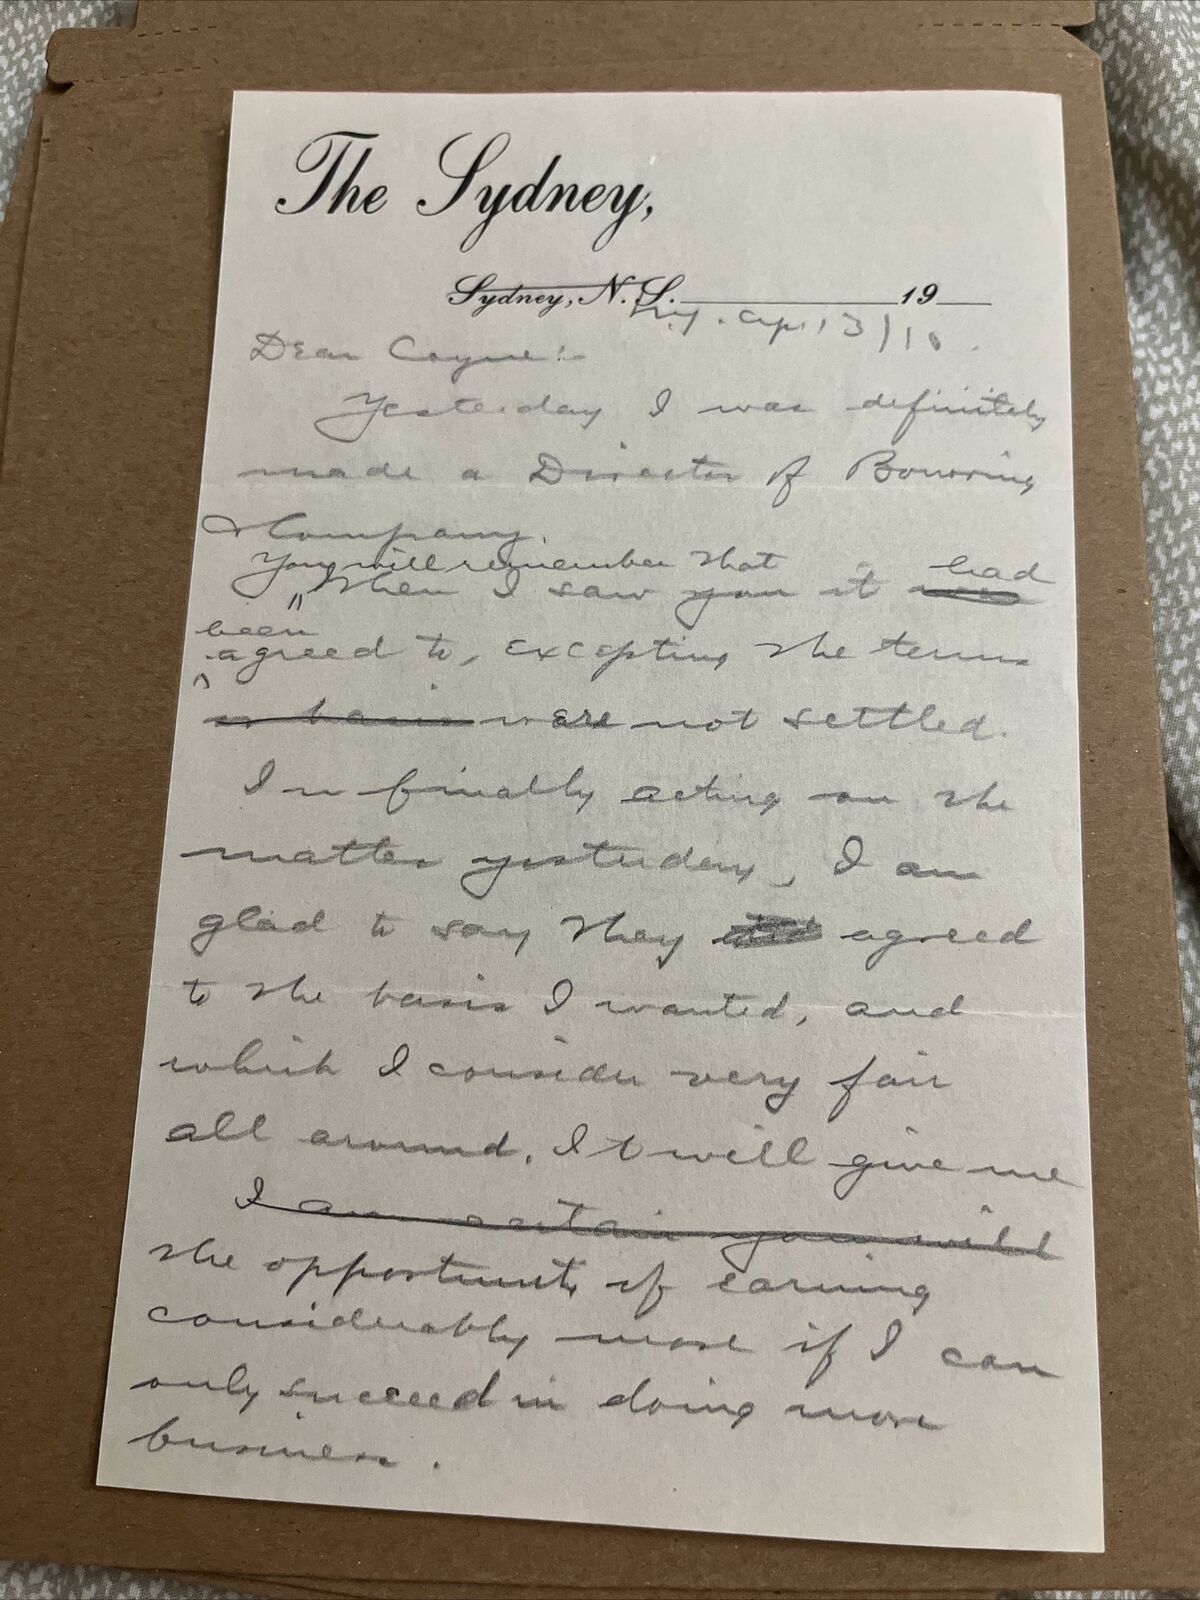 Antique 1910 Letter: The Sydney Nova Scotia Hotel Letterhead Canada History